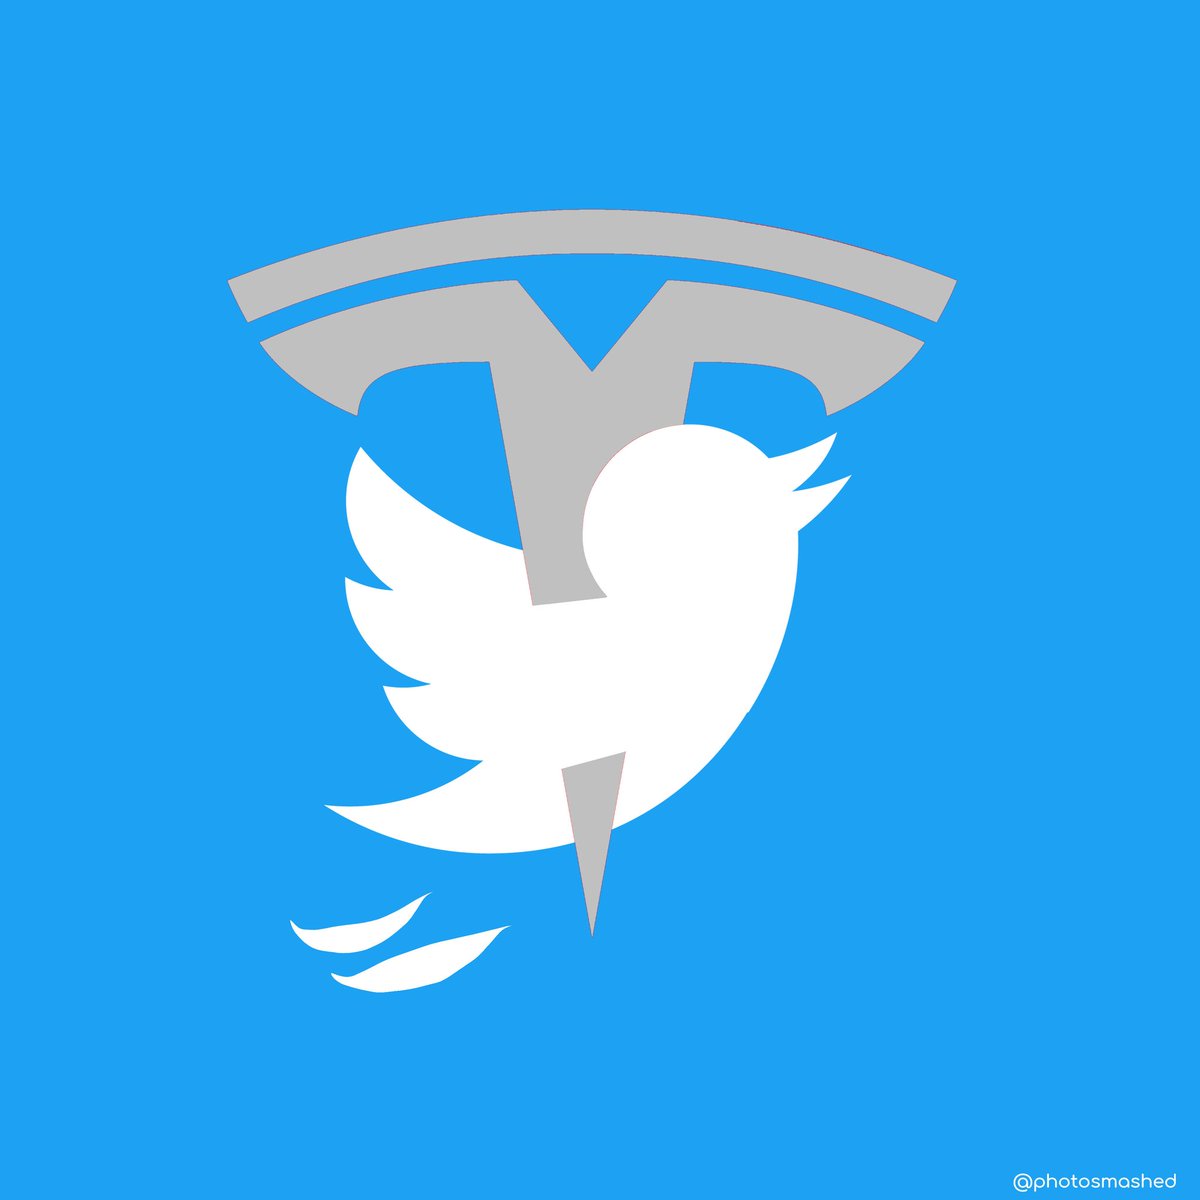 New Twitter logo by @StarWarsPhtshp